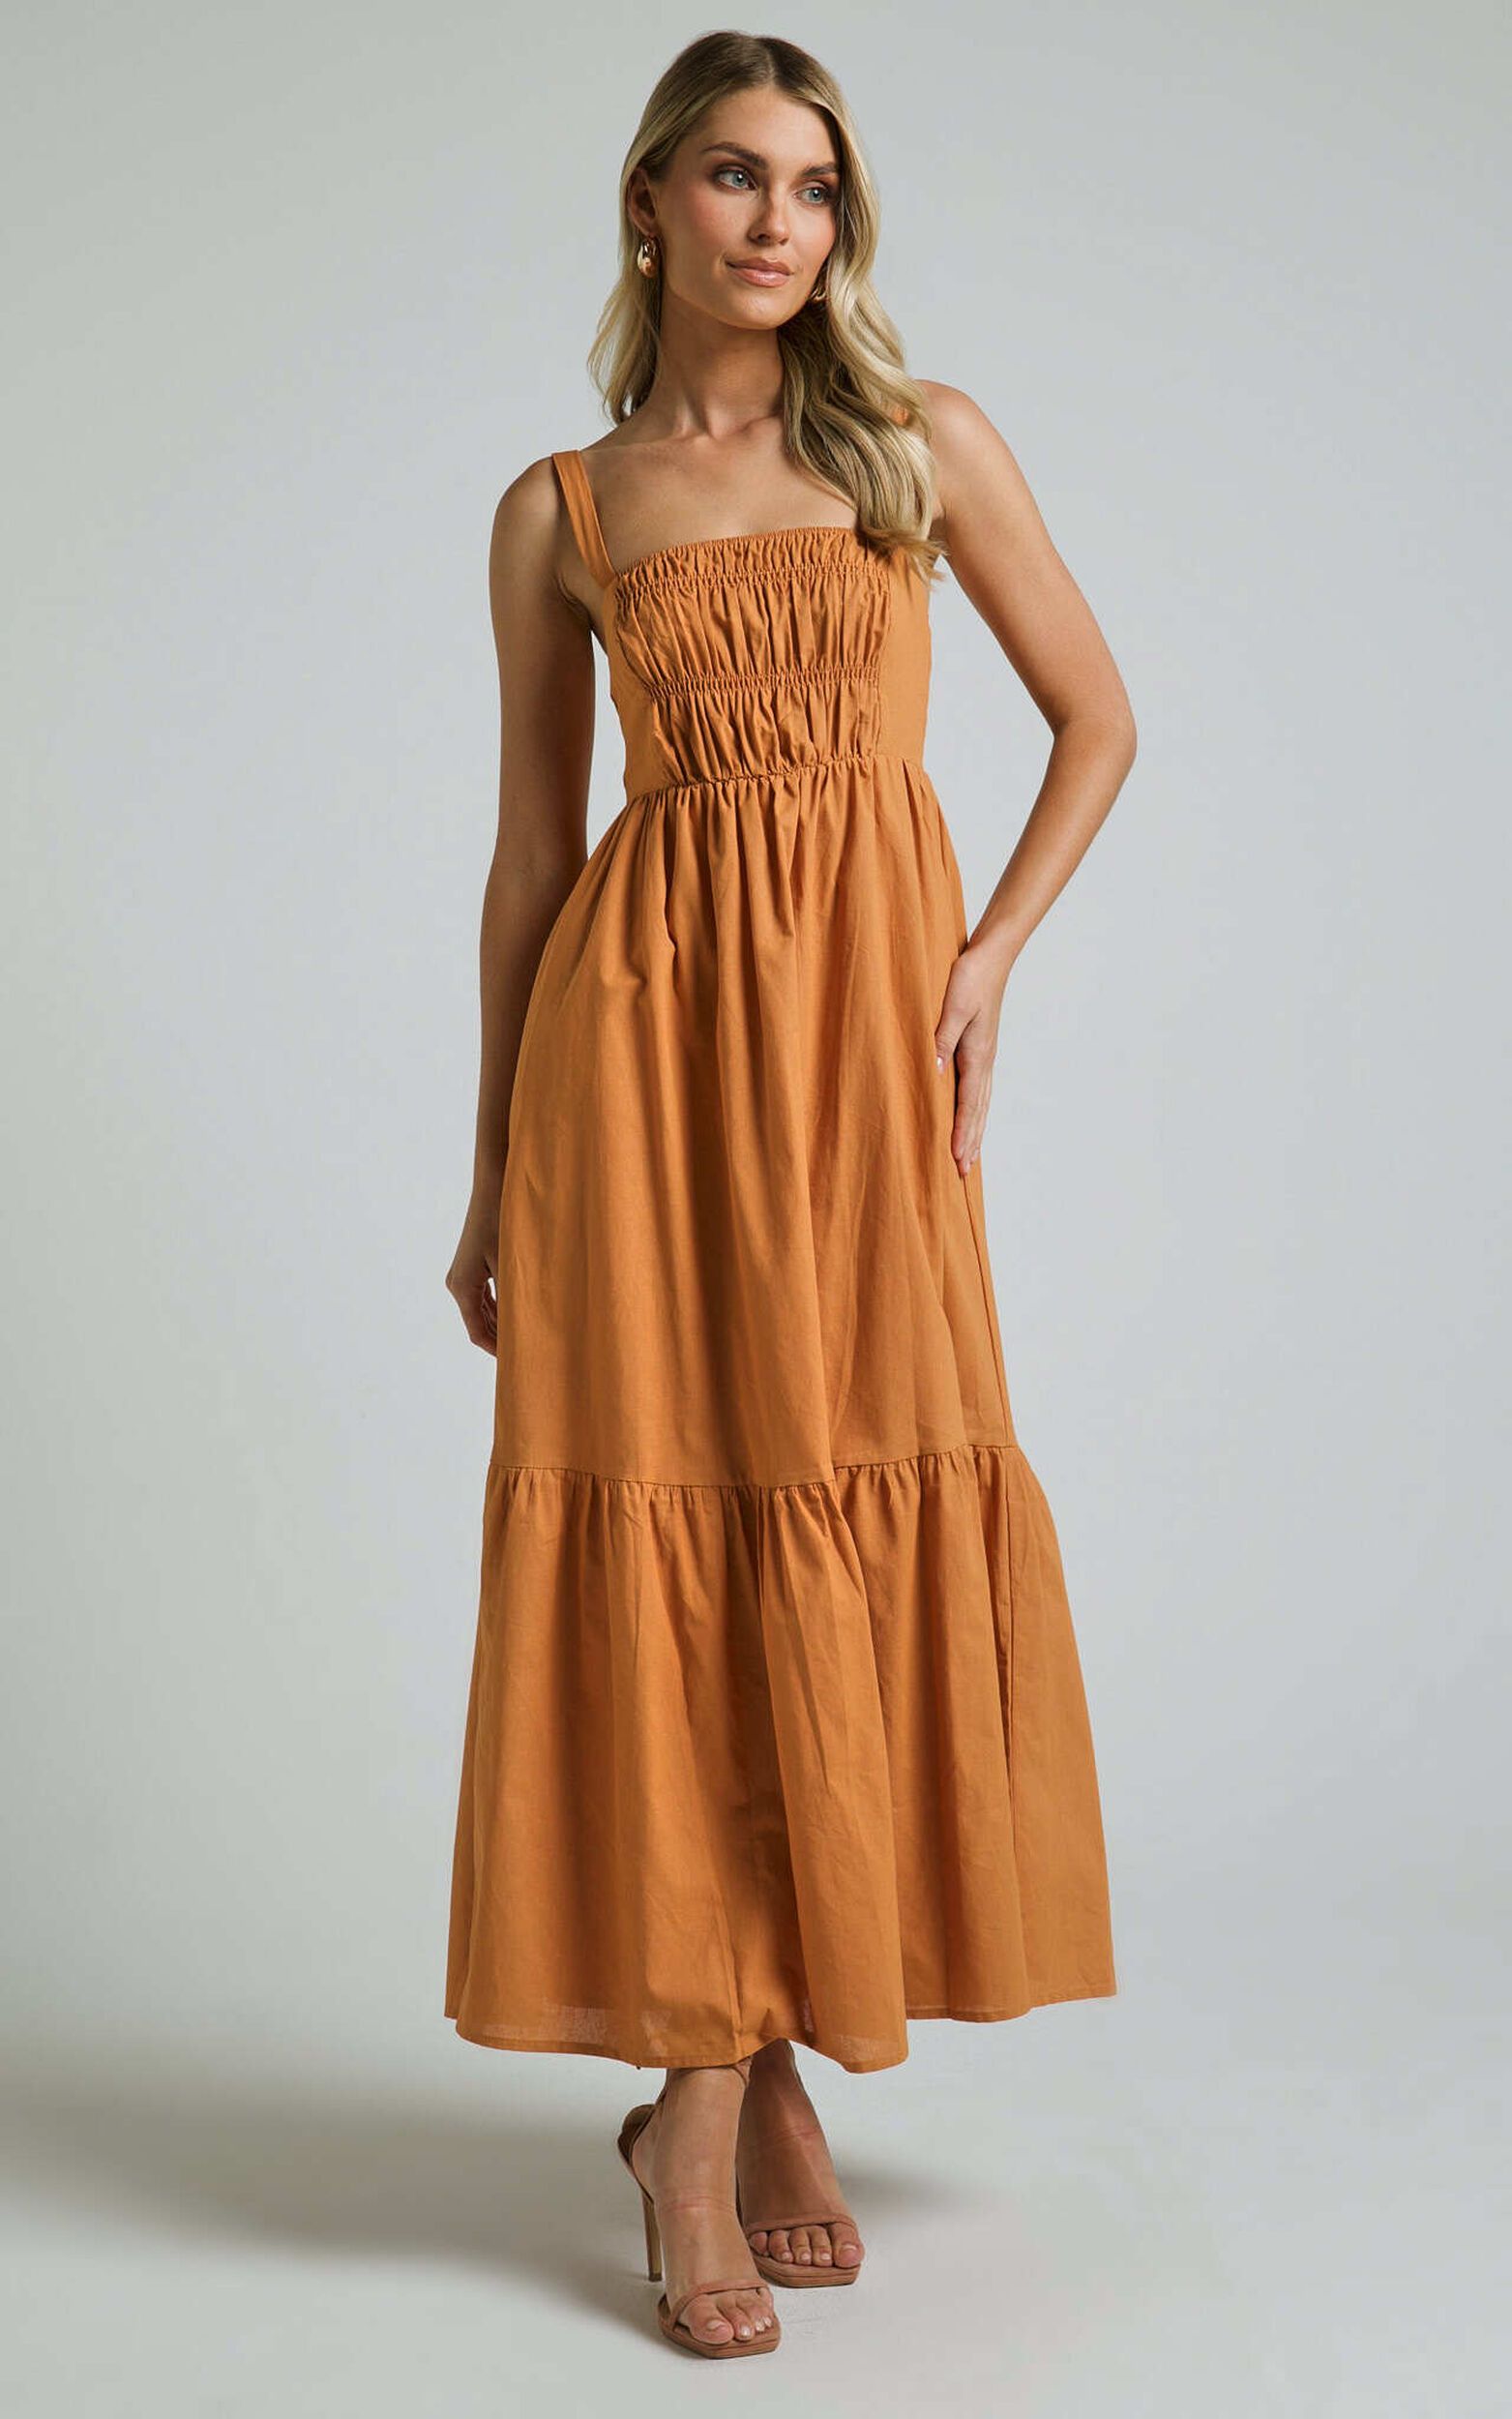 Mauree Maxi Dress - Straight Sleeveless Tiered Dress in Caramel | Showpo (US, UK & Europe)